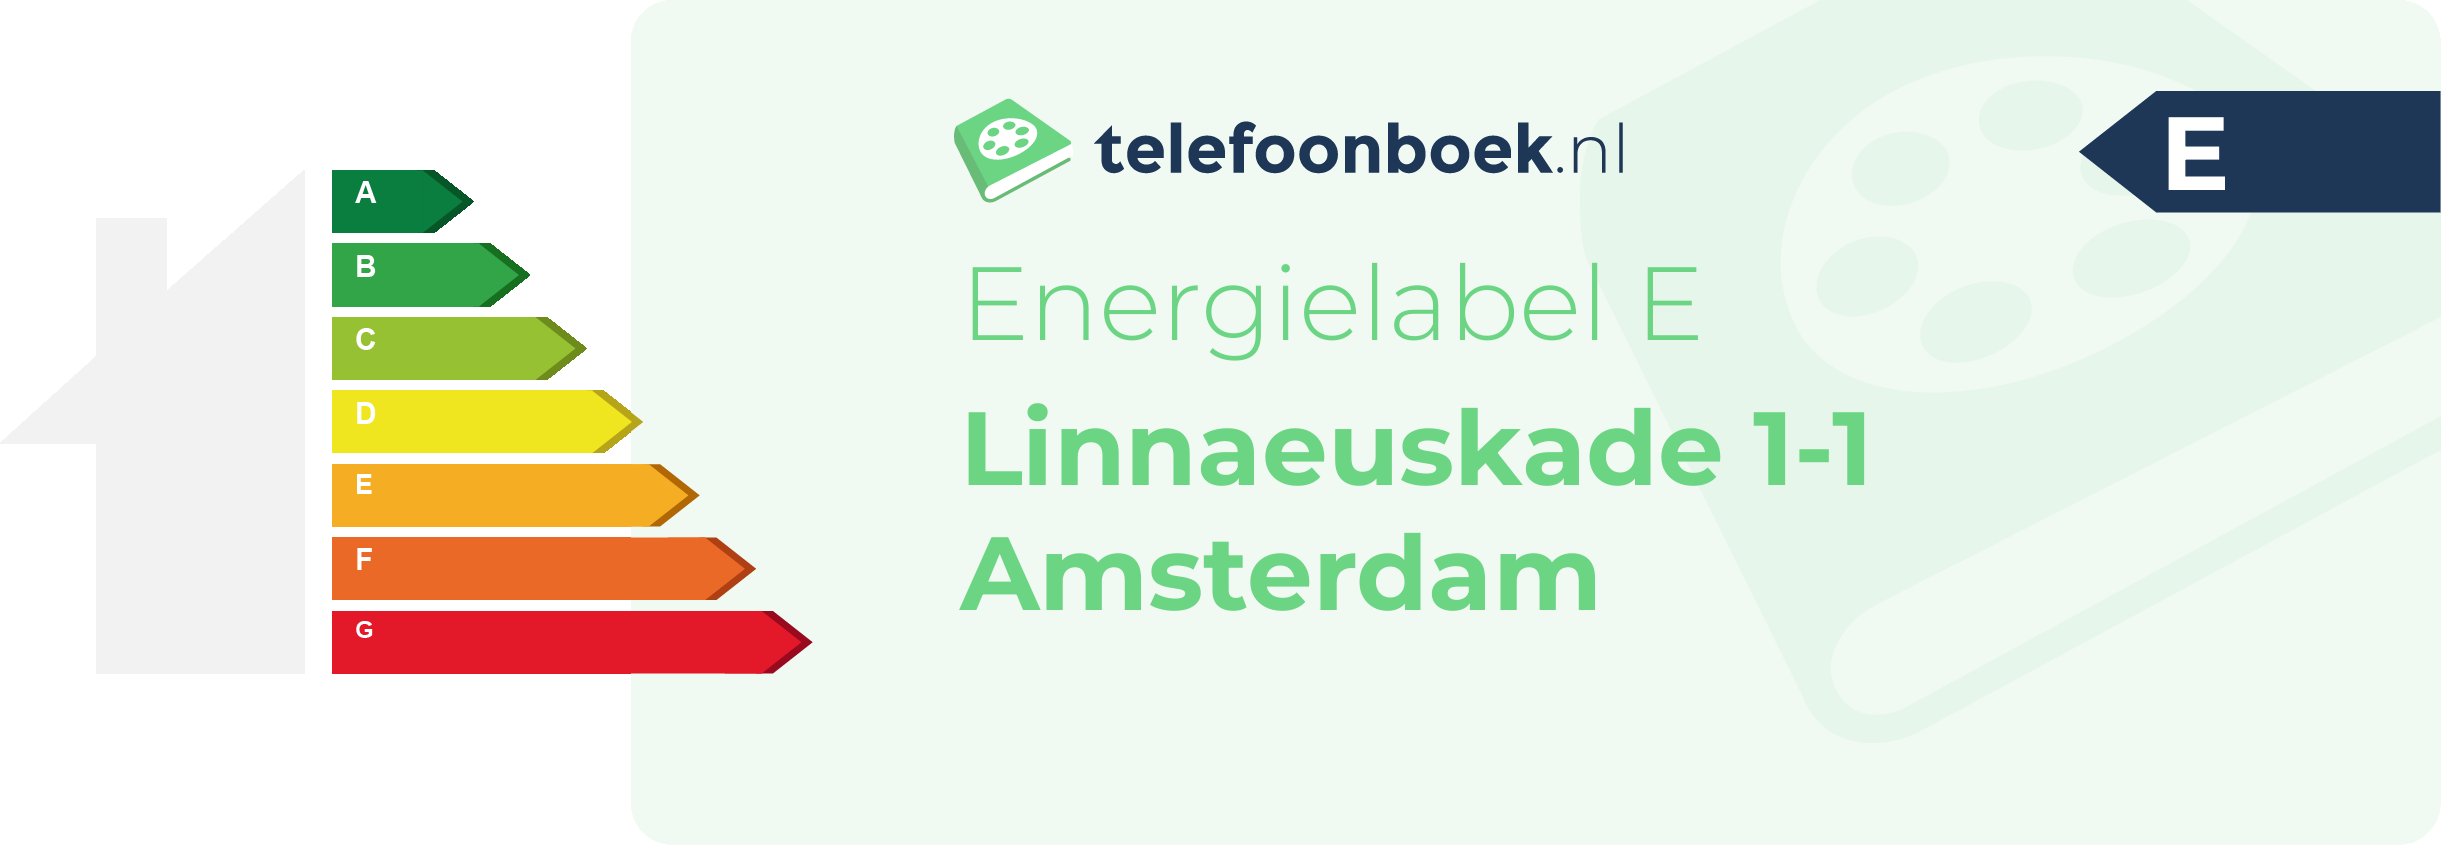 Energielabel Linnaeuskade 1-1 Amsterdam